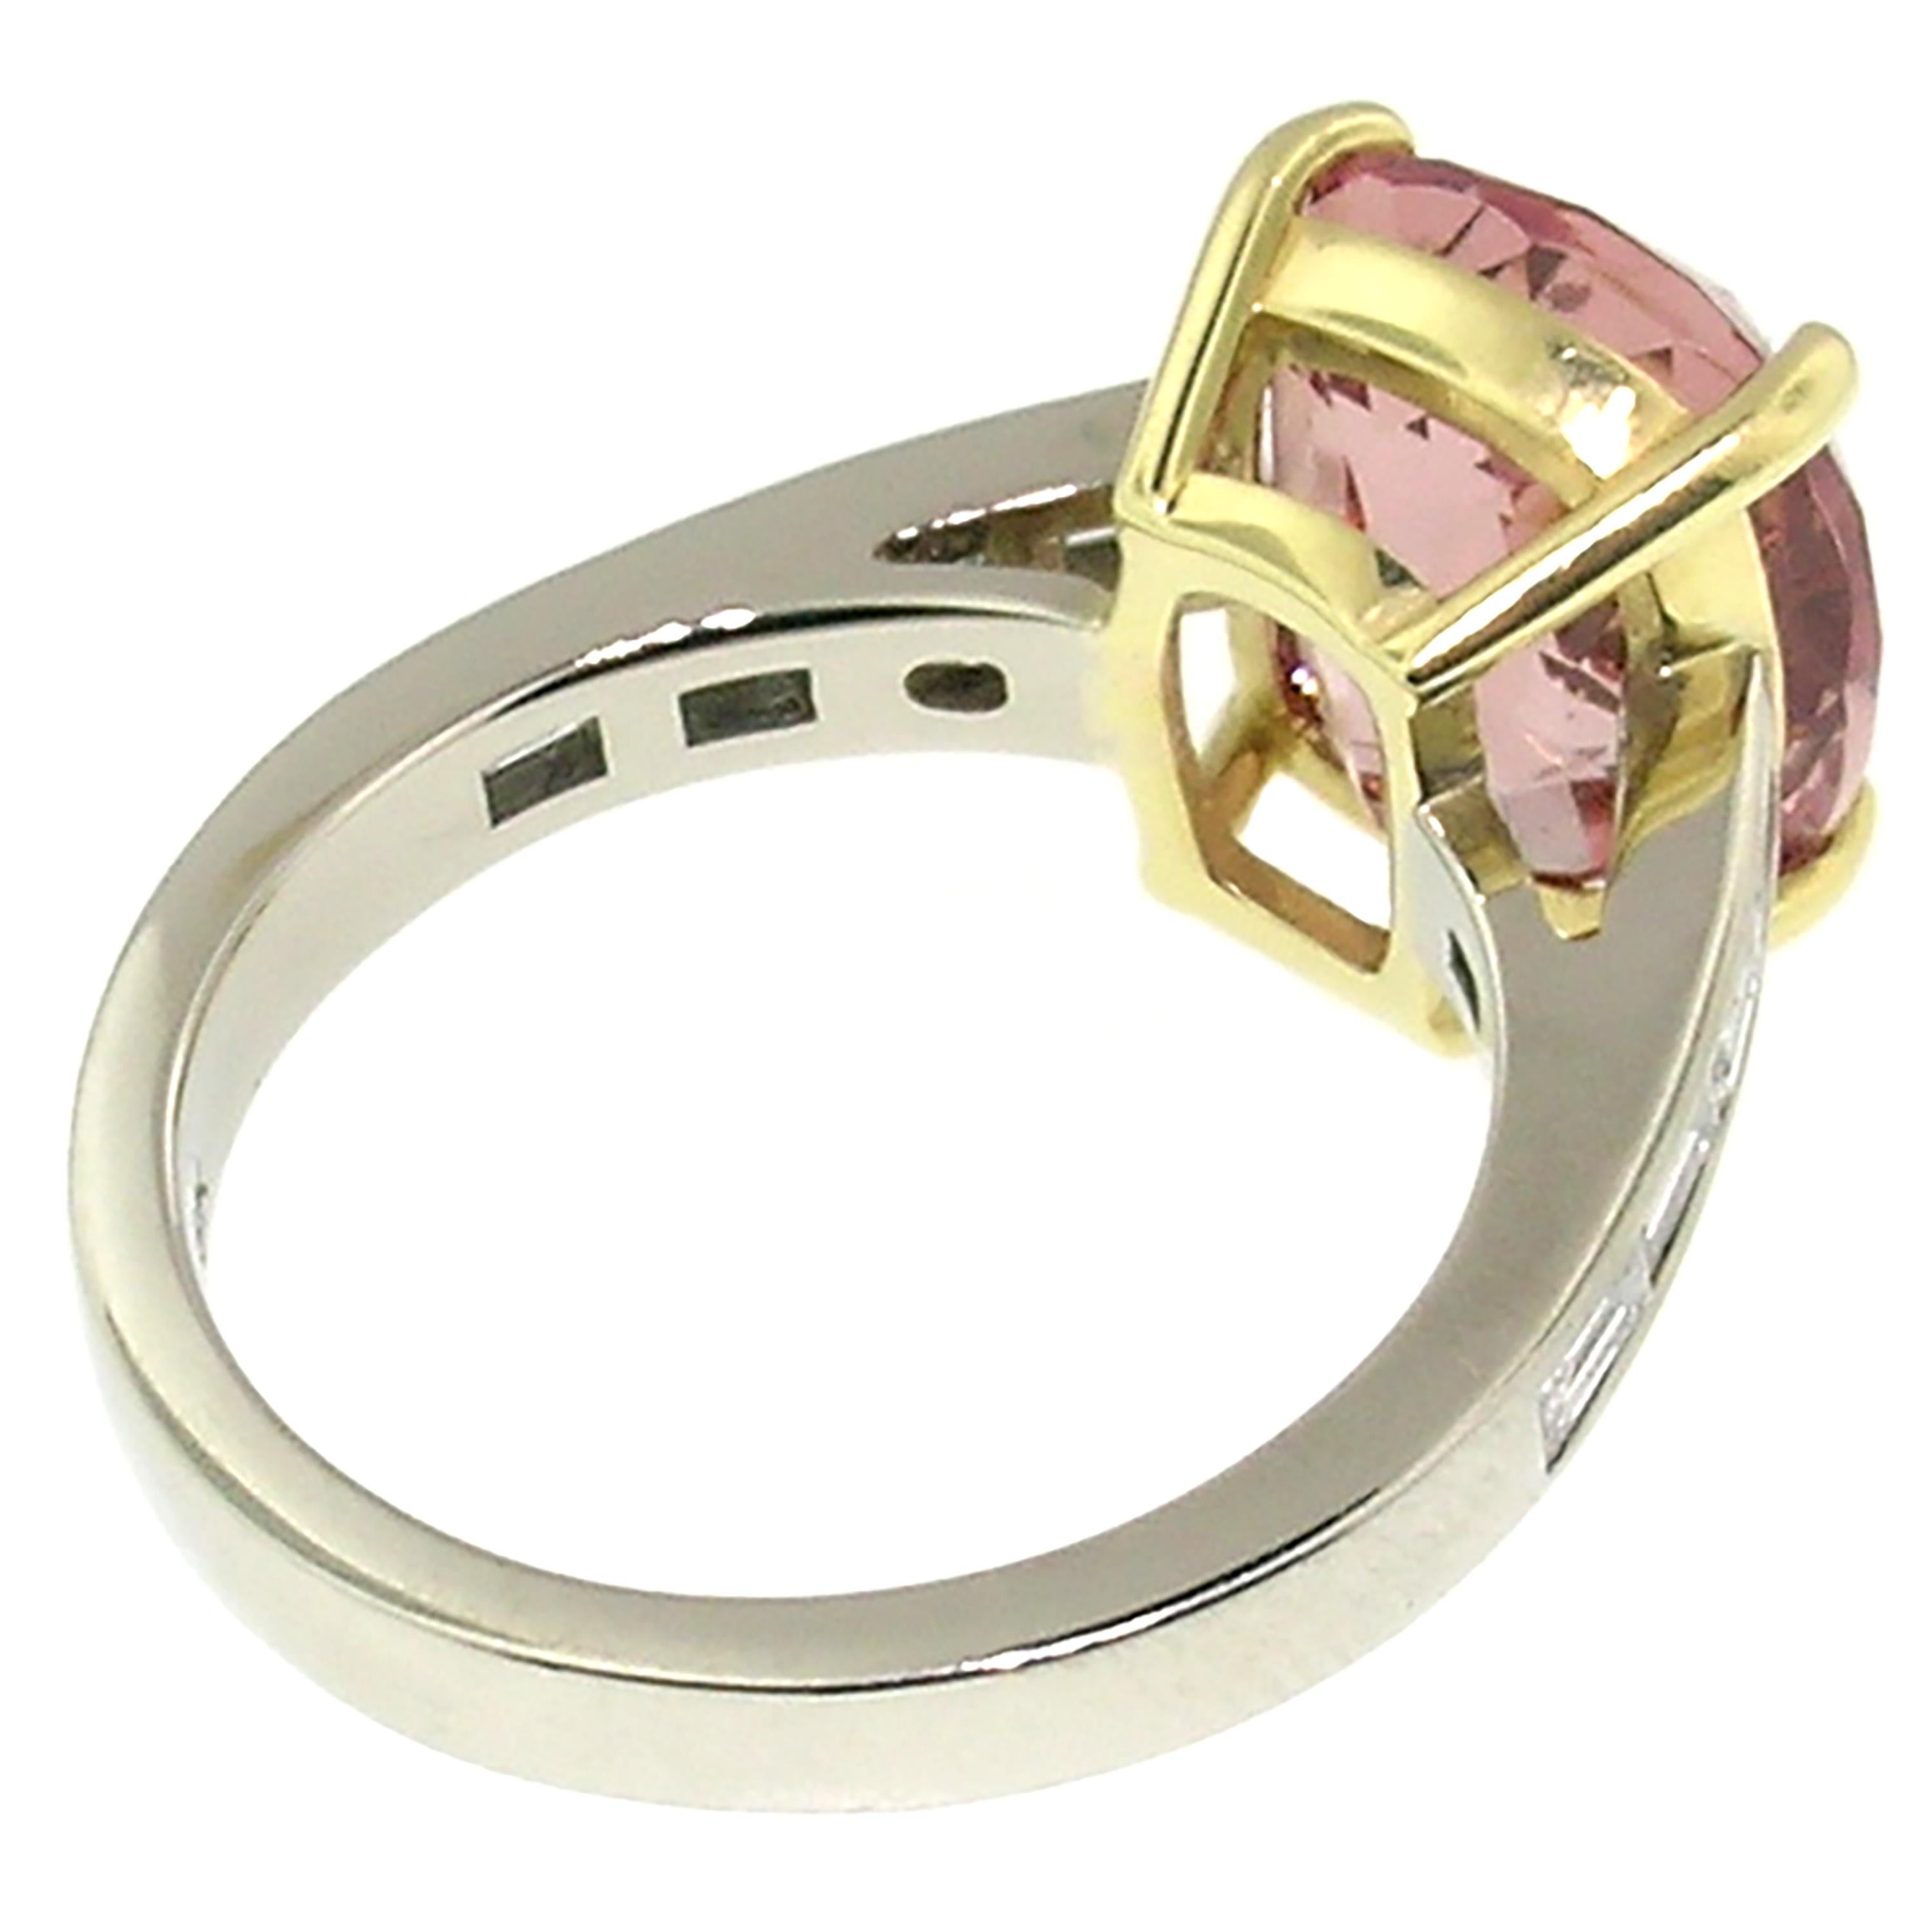 Cushion Cut 6.83 Carat Mahenge Pink Garnet in 18kt Gold and Diamond Ring by Cynthia Scott